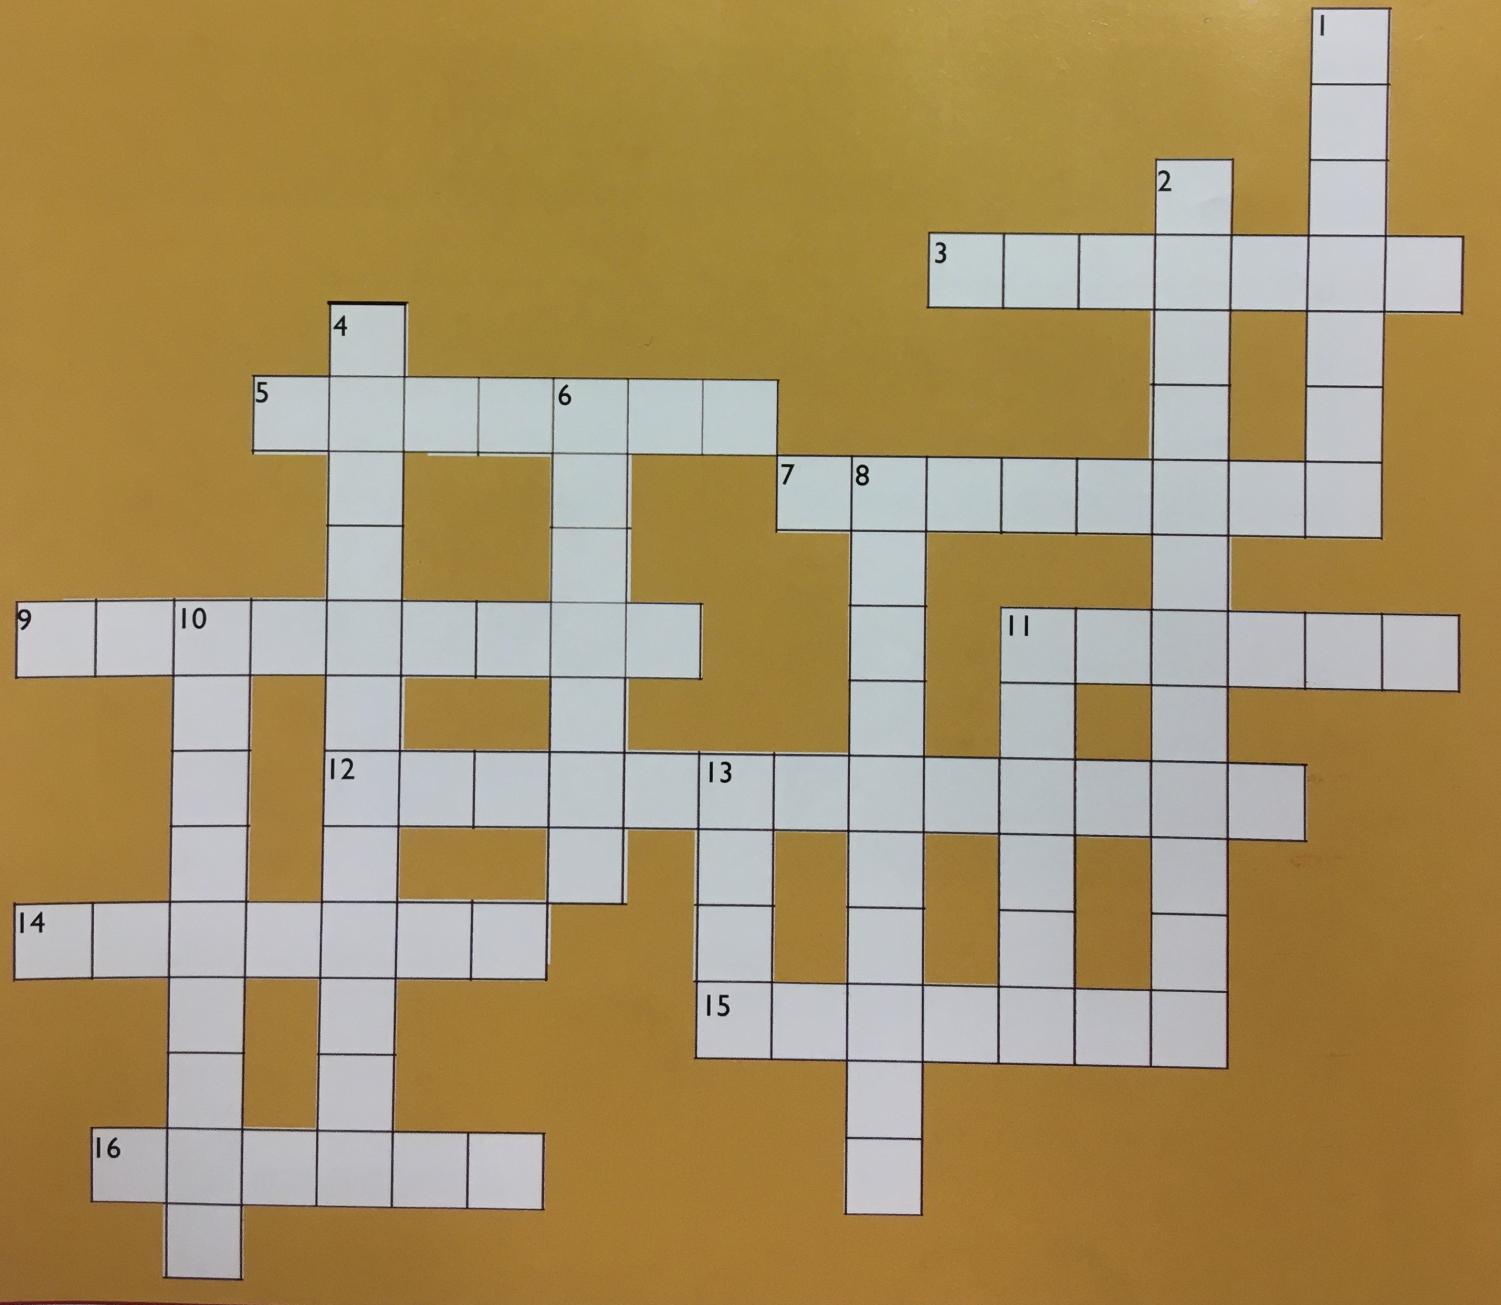 Answers to Jan 2020 Carpe Diem crossword puzzle 3TEN